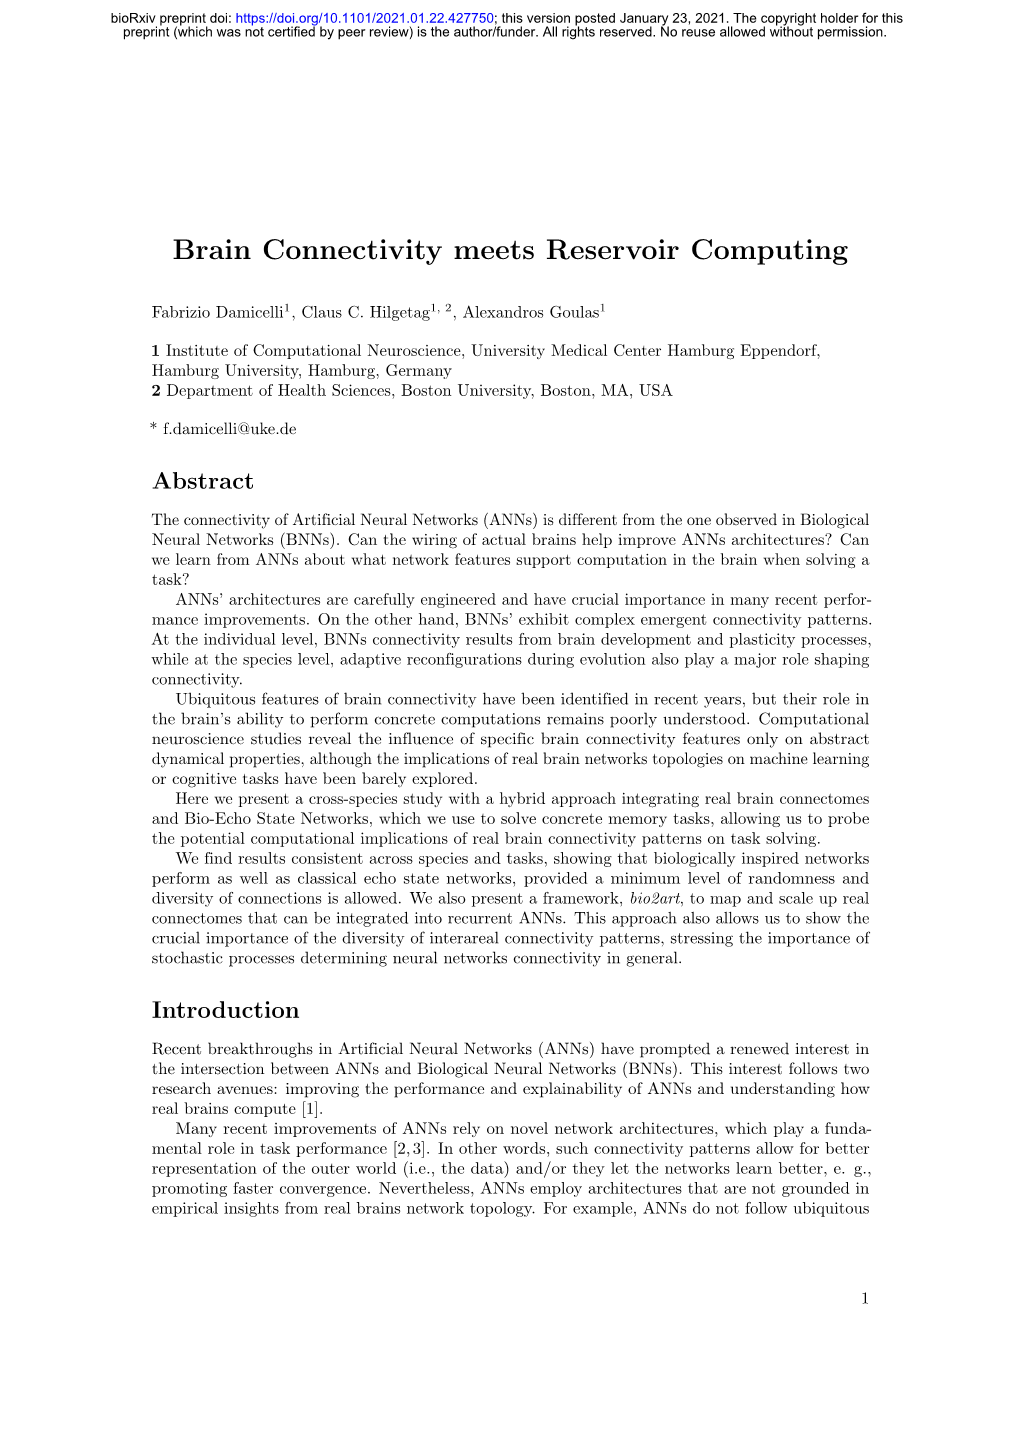 Brain Connectivity Meets Reservoir Computing